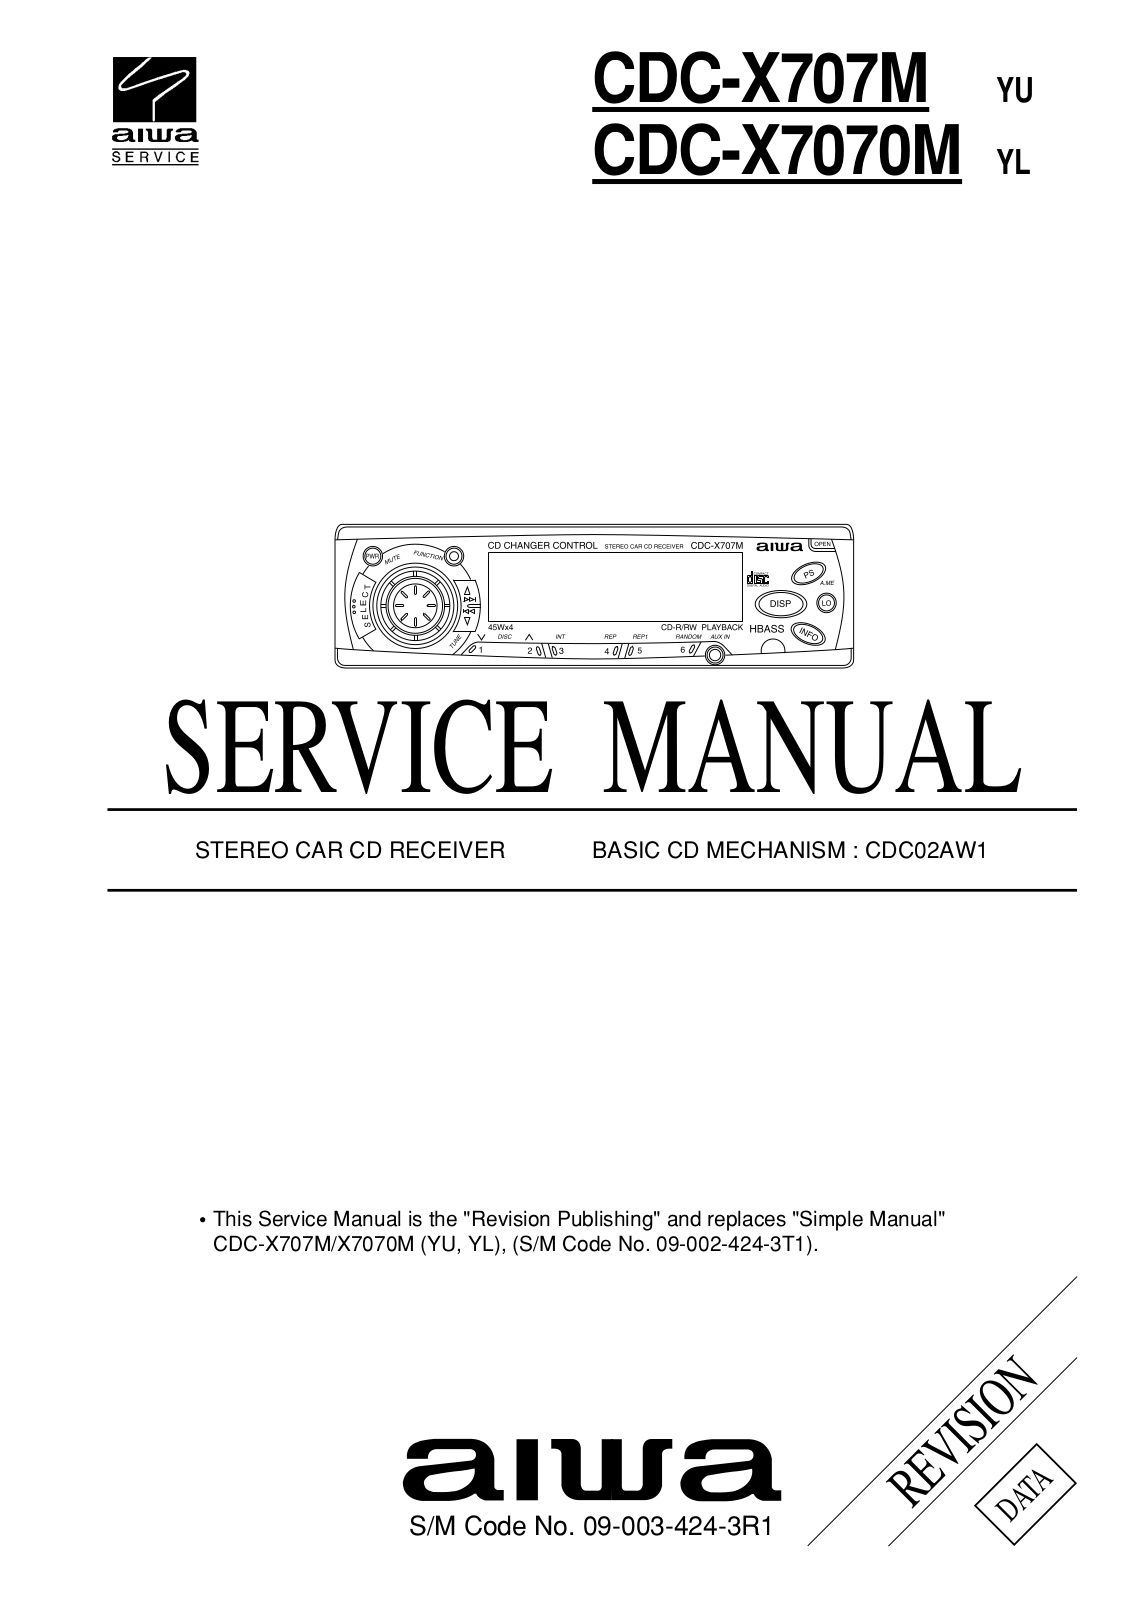 AIWA CDC-X707, CDC-X7070 Service Manual